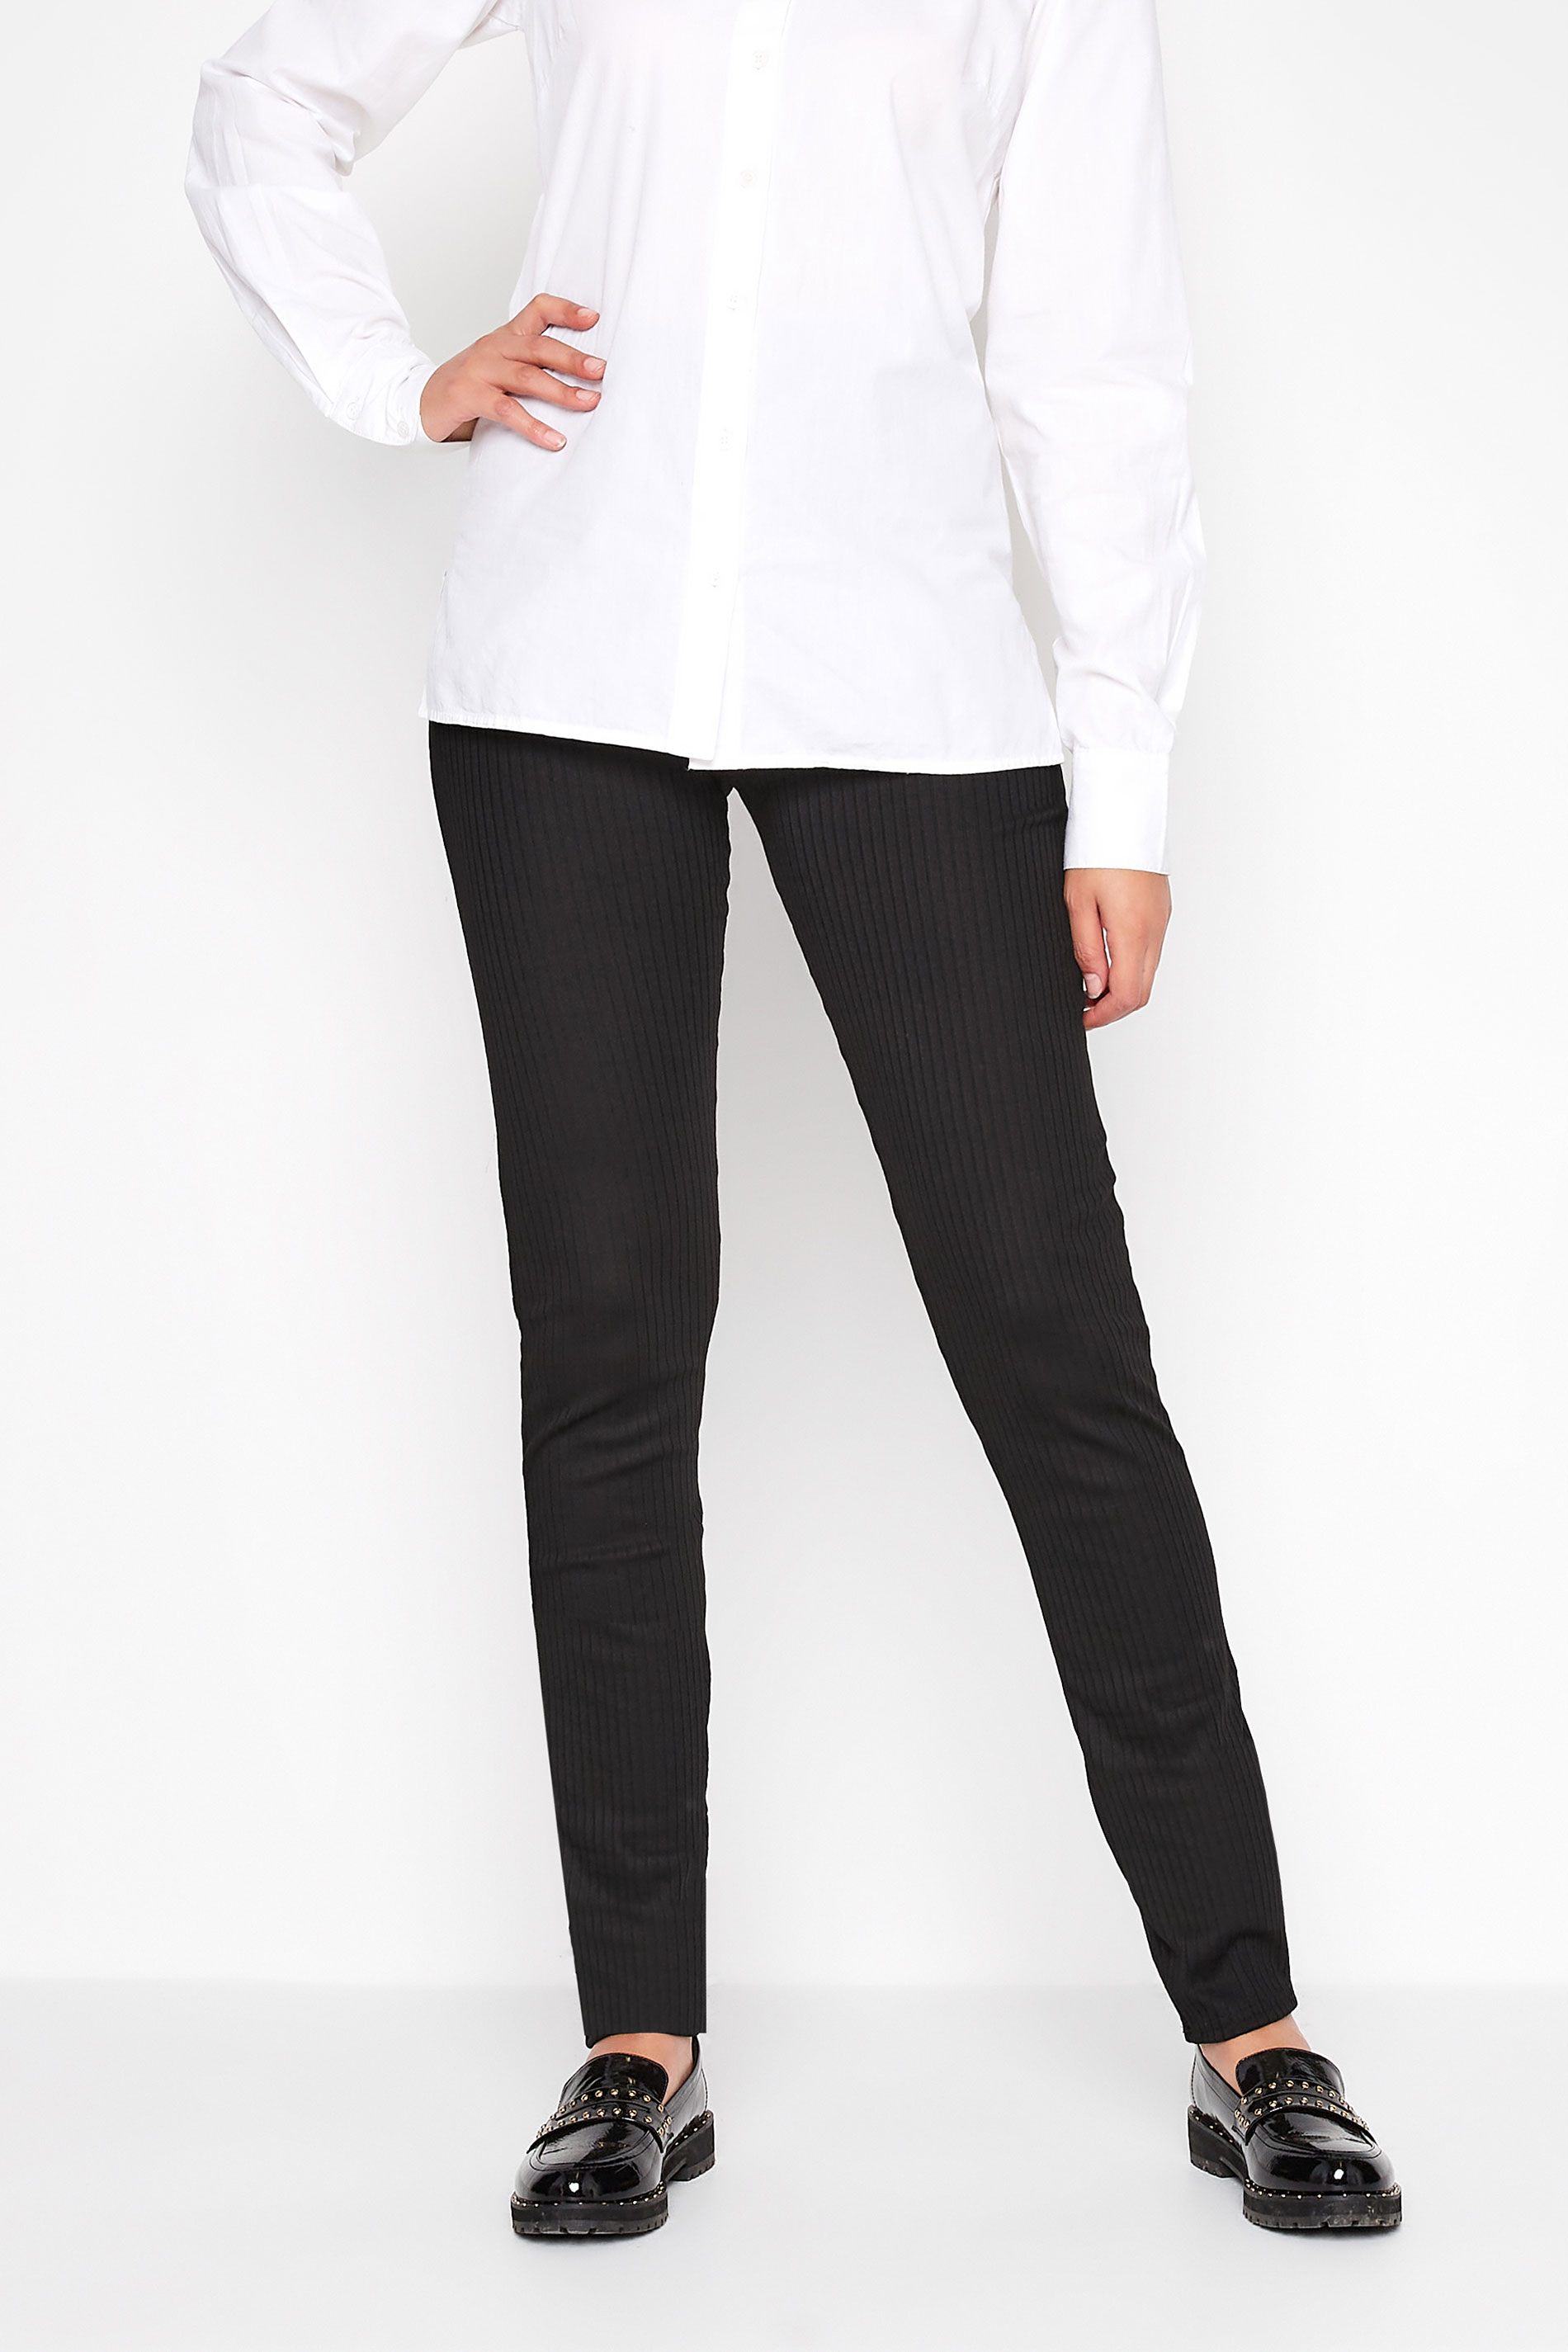 LTS Tall Women's Black Ribbed Slim Leg Trousers | Long Tall Sally  1